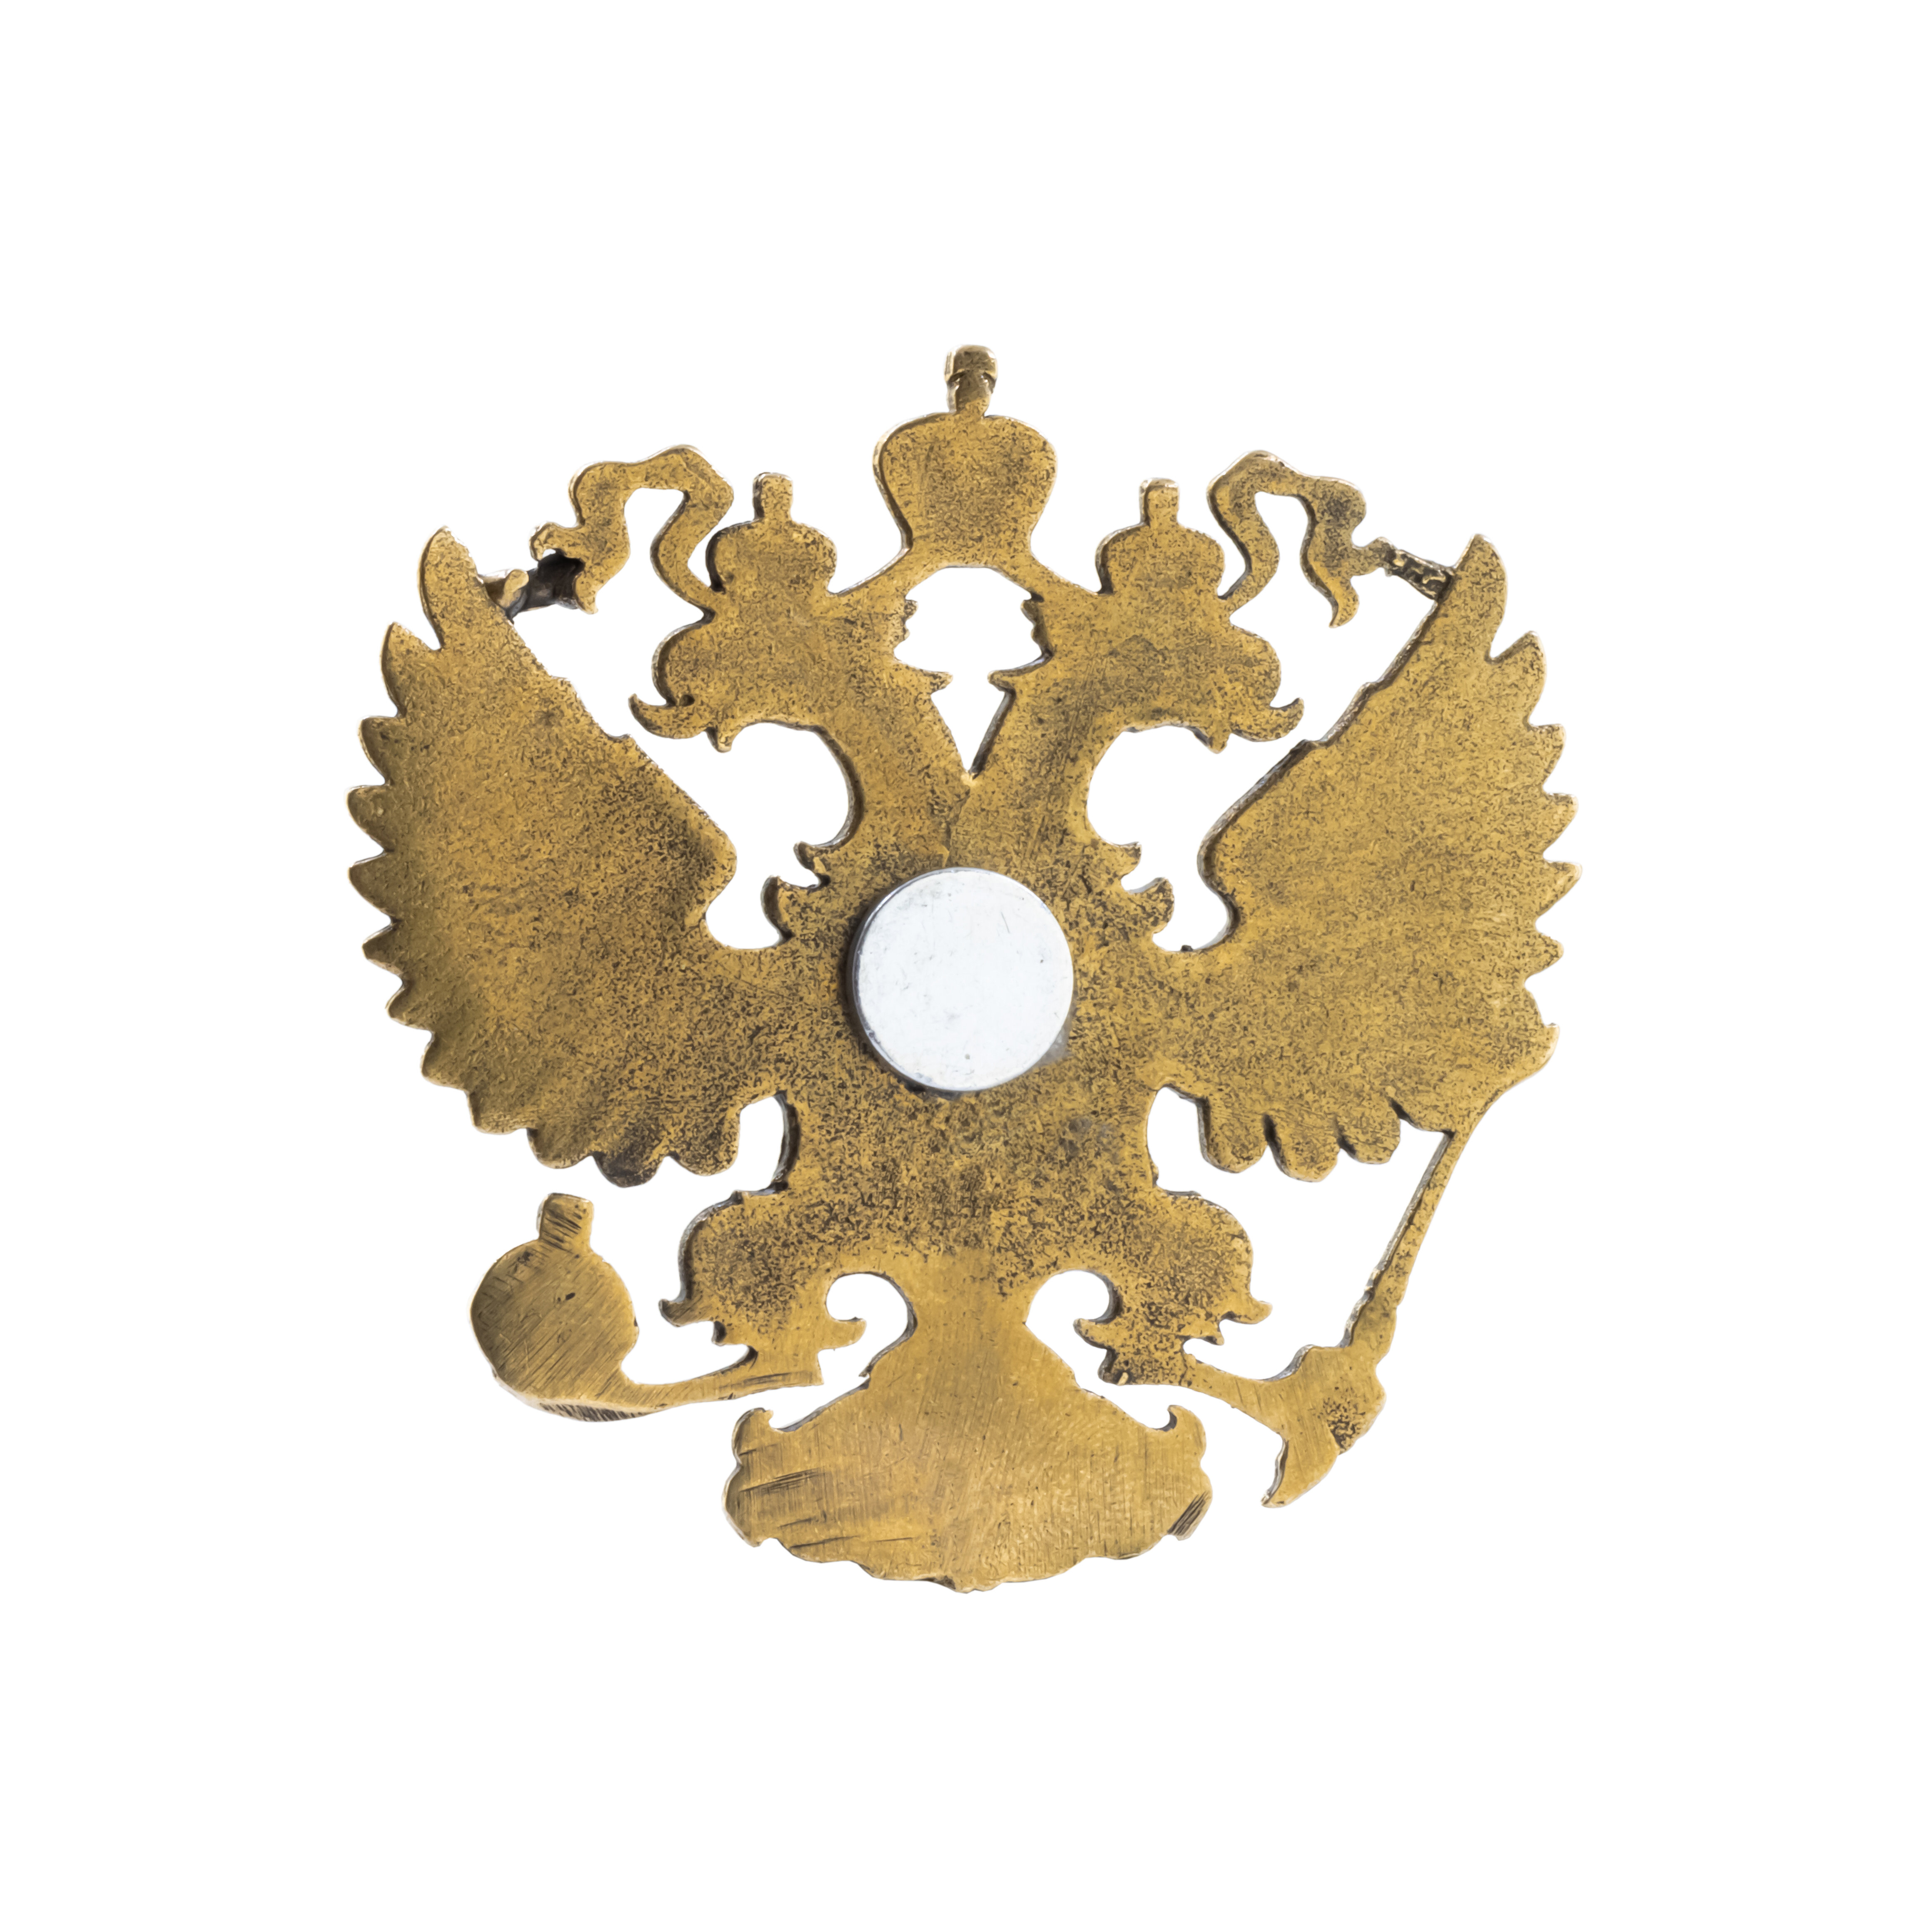 Сувенирный магнит Герб России 60мм (ВхШхД 0х6х6)